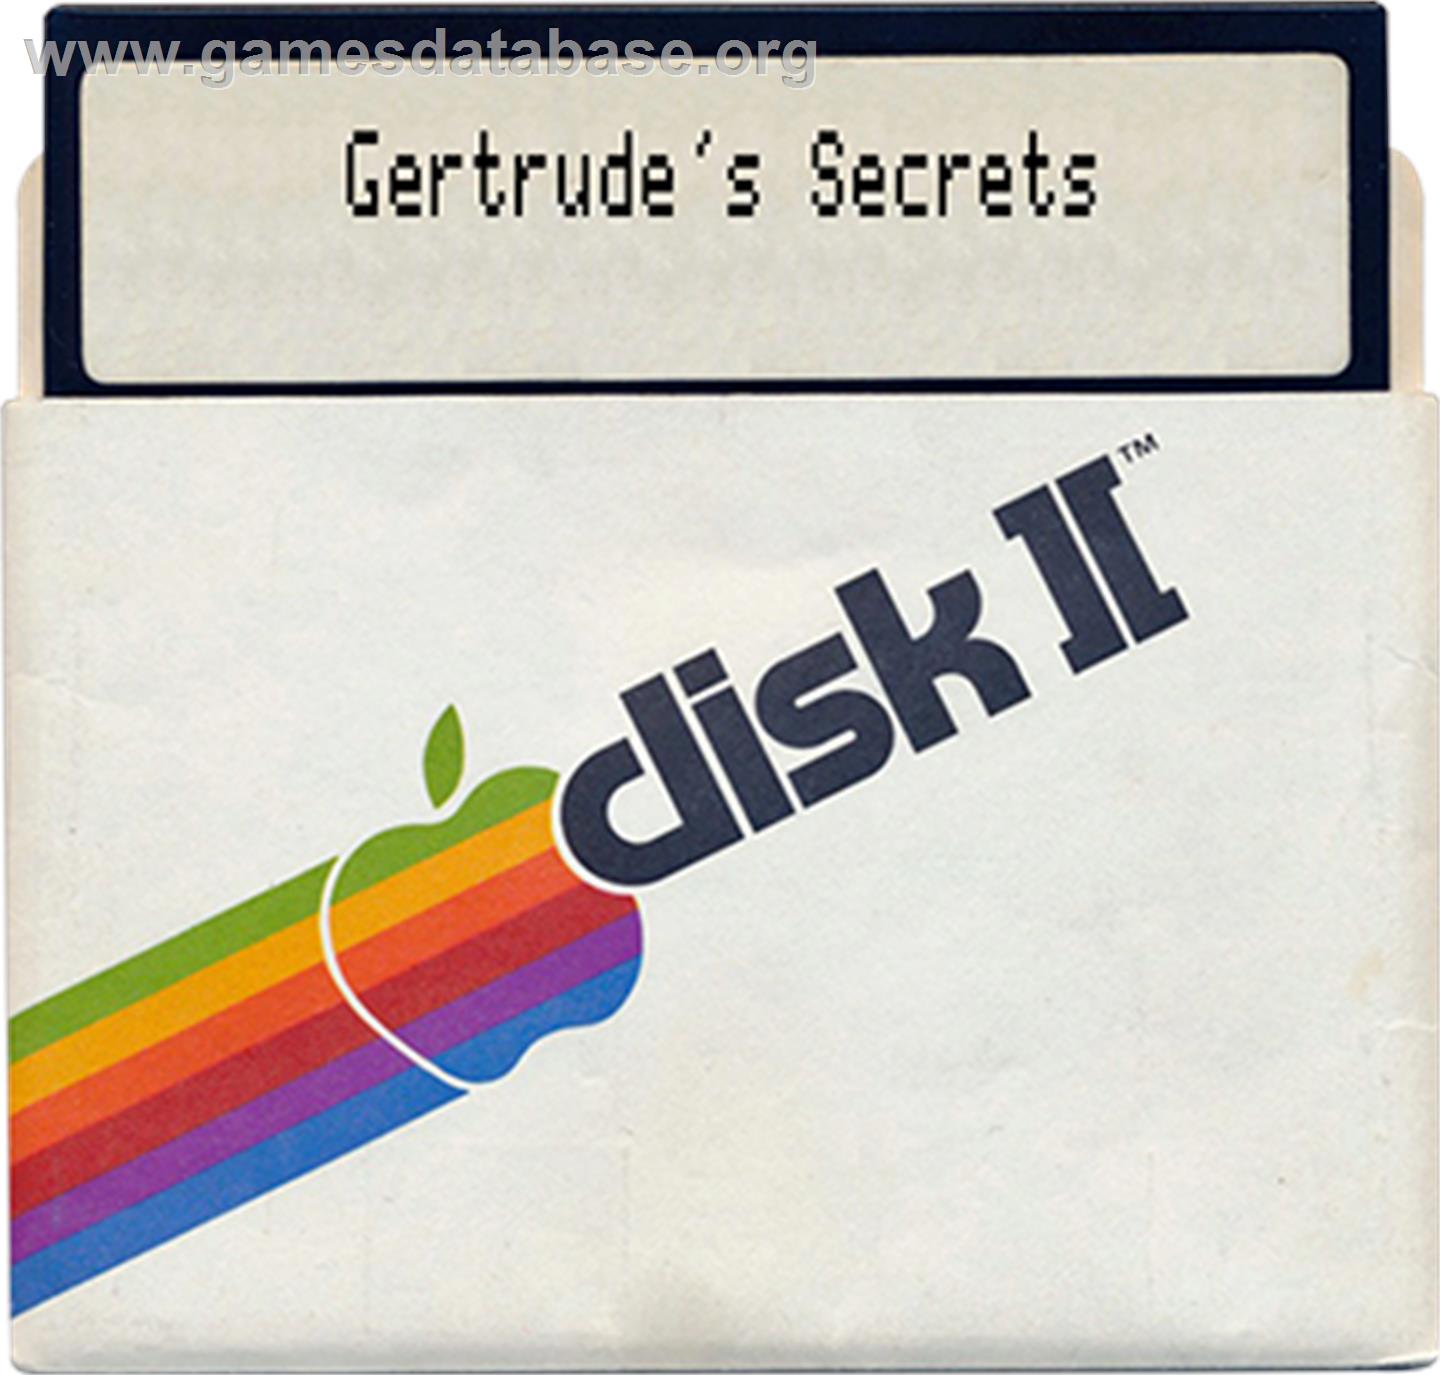 Gertrude's Secrets - Apple II - Artwork - Disc